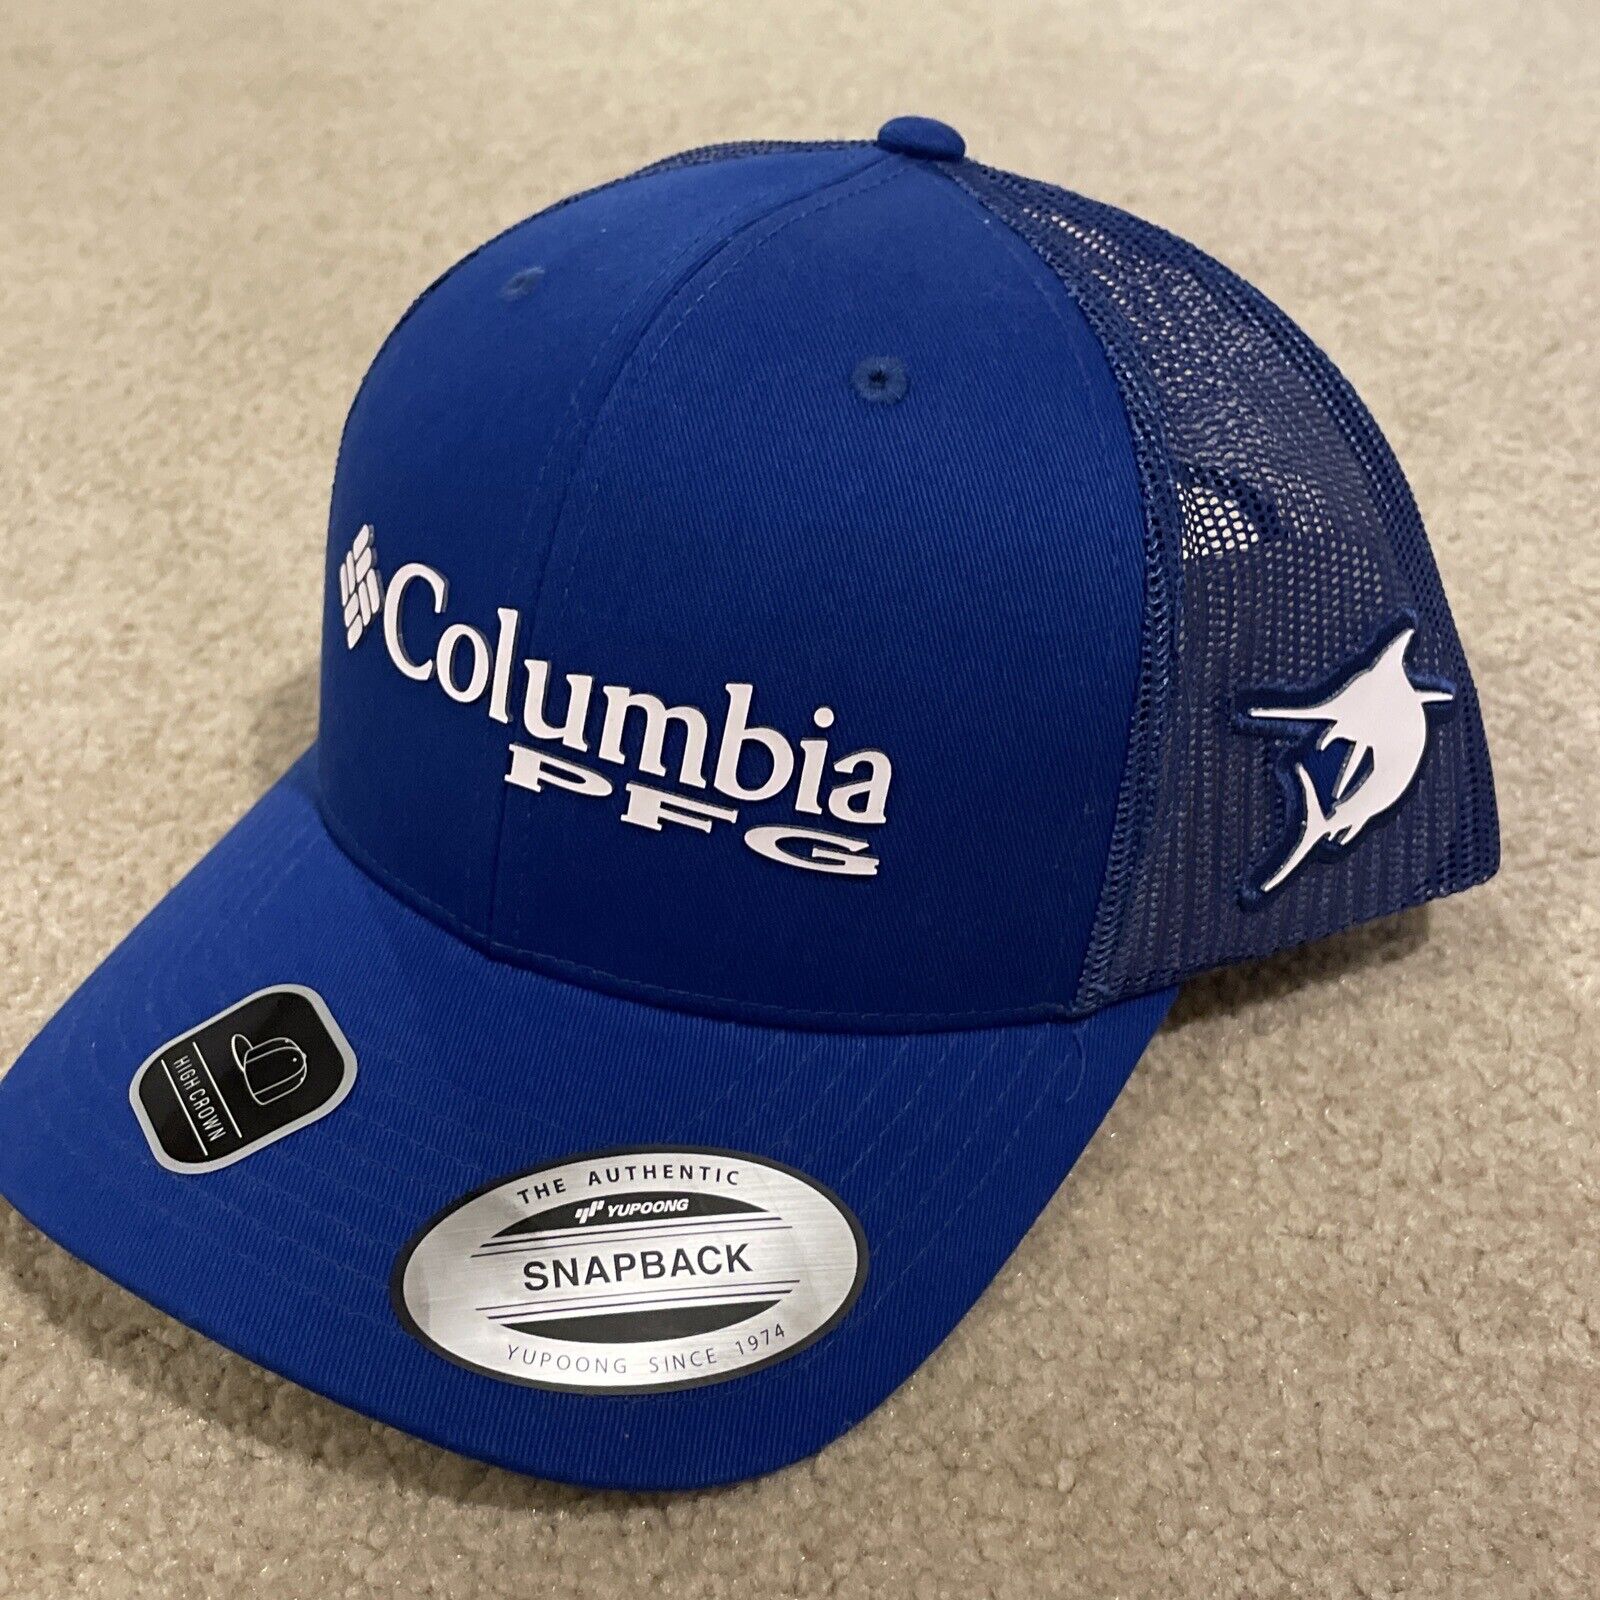 Columbia PFG Mesh Pique Ball Cap Adjustable Blue Fishing Hat